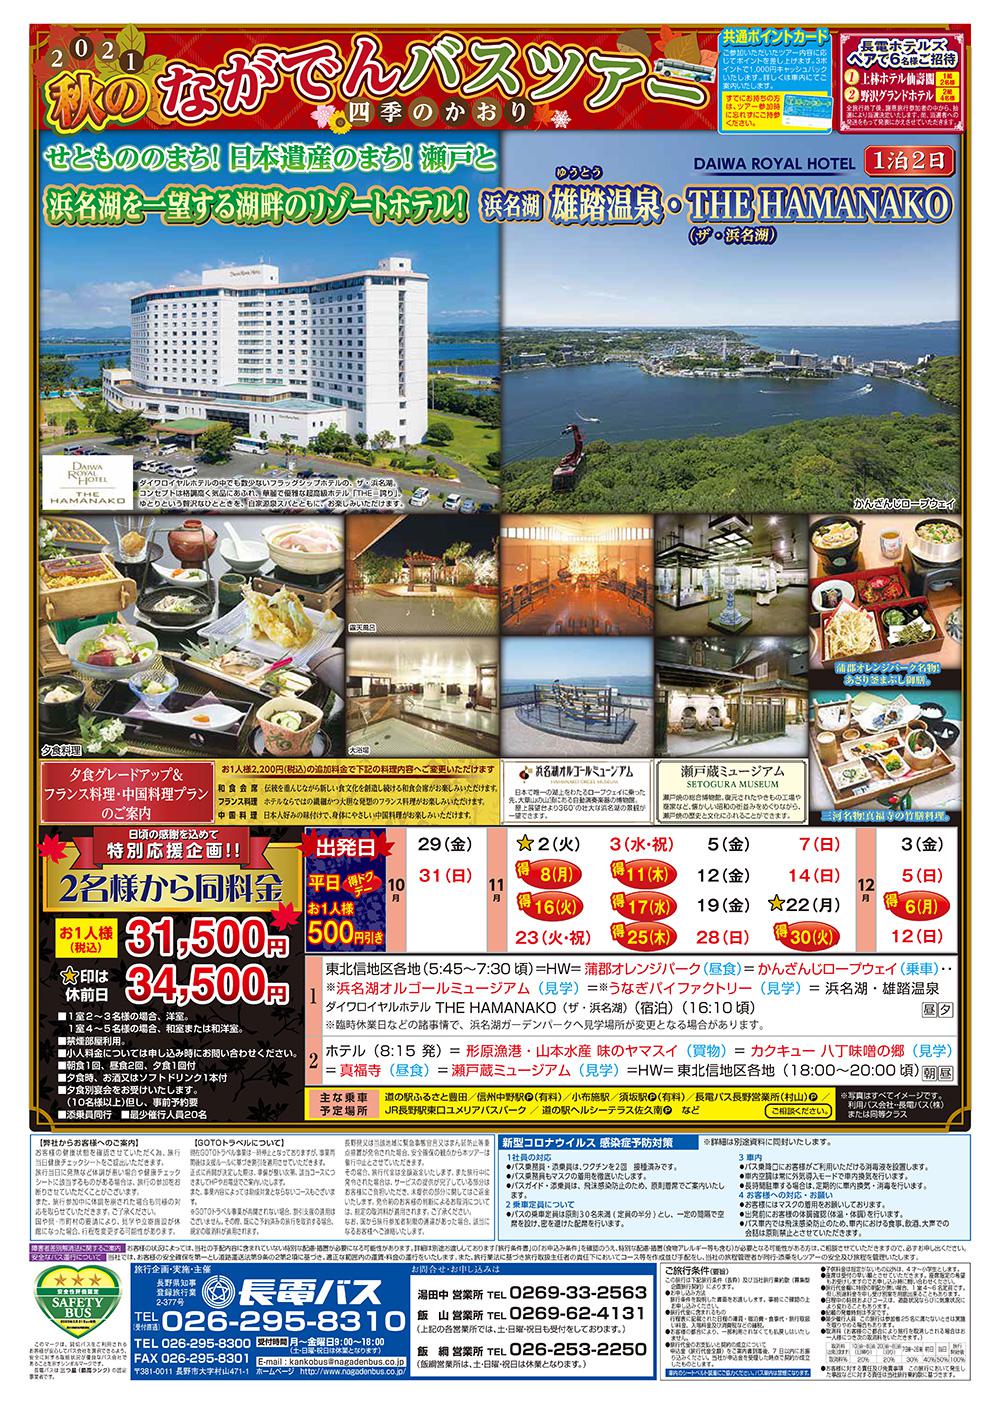 http://www.nagadenbus.co.jp/news/2021tour-shaonryokou.jpg